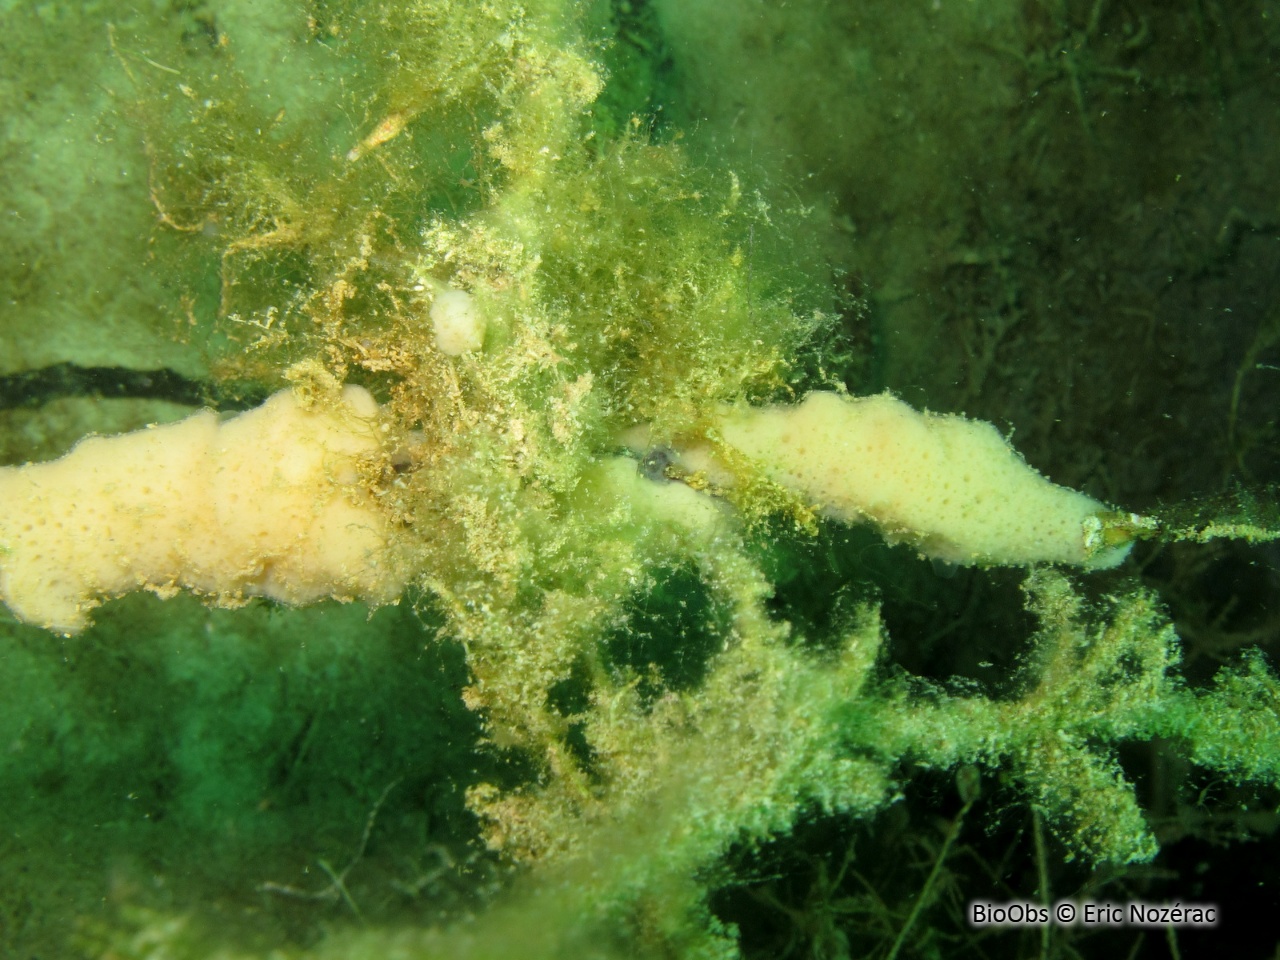 Eponge d'eau douce - Spongilla lacustris - Eric Nozérac - BioObs